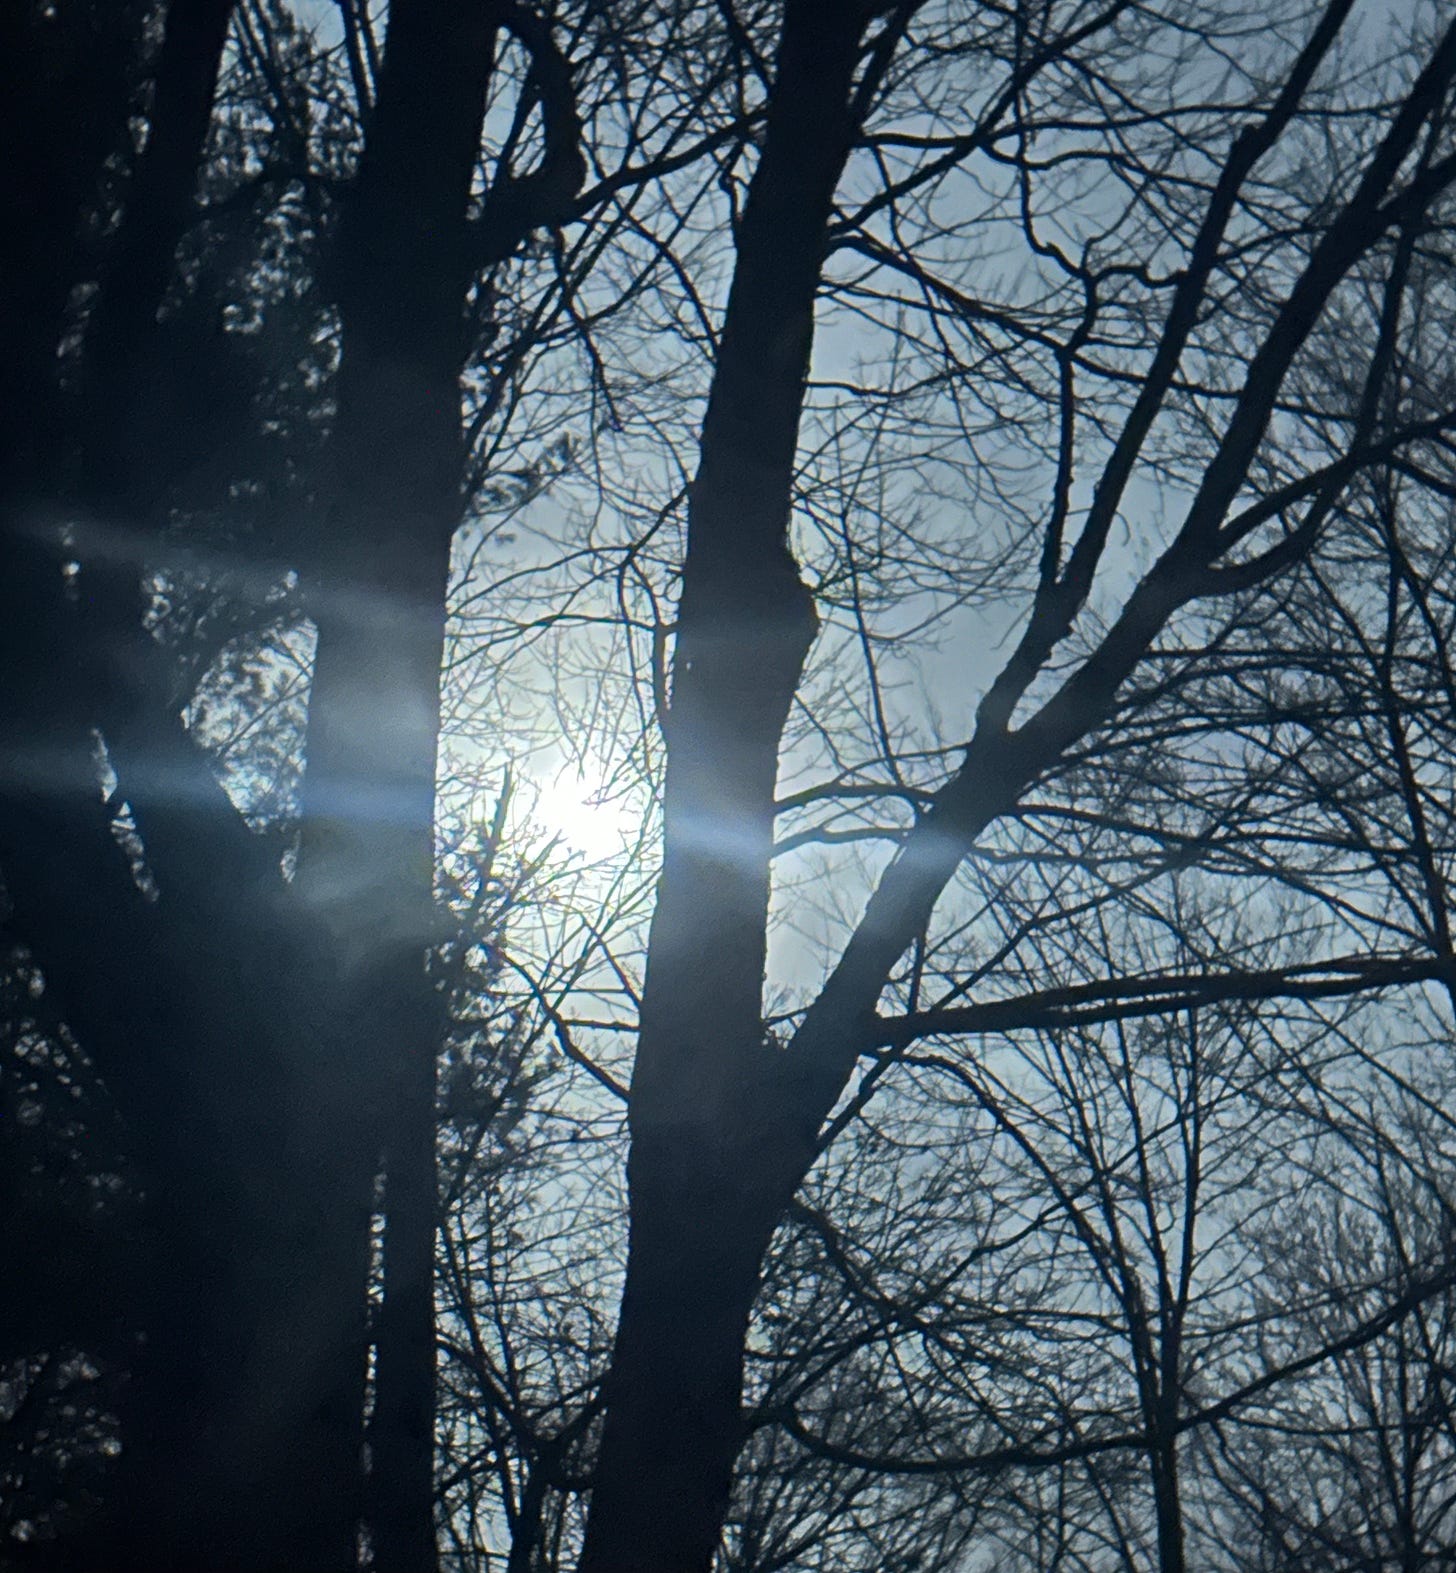 The moon peeks through tree branches in silhouette, illuminating nighttime fog.